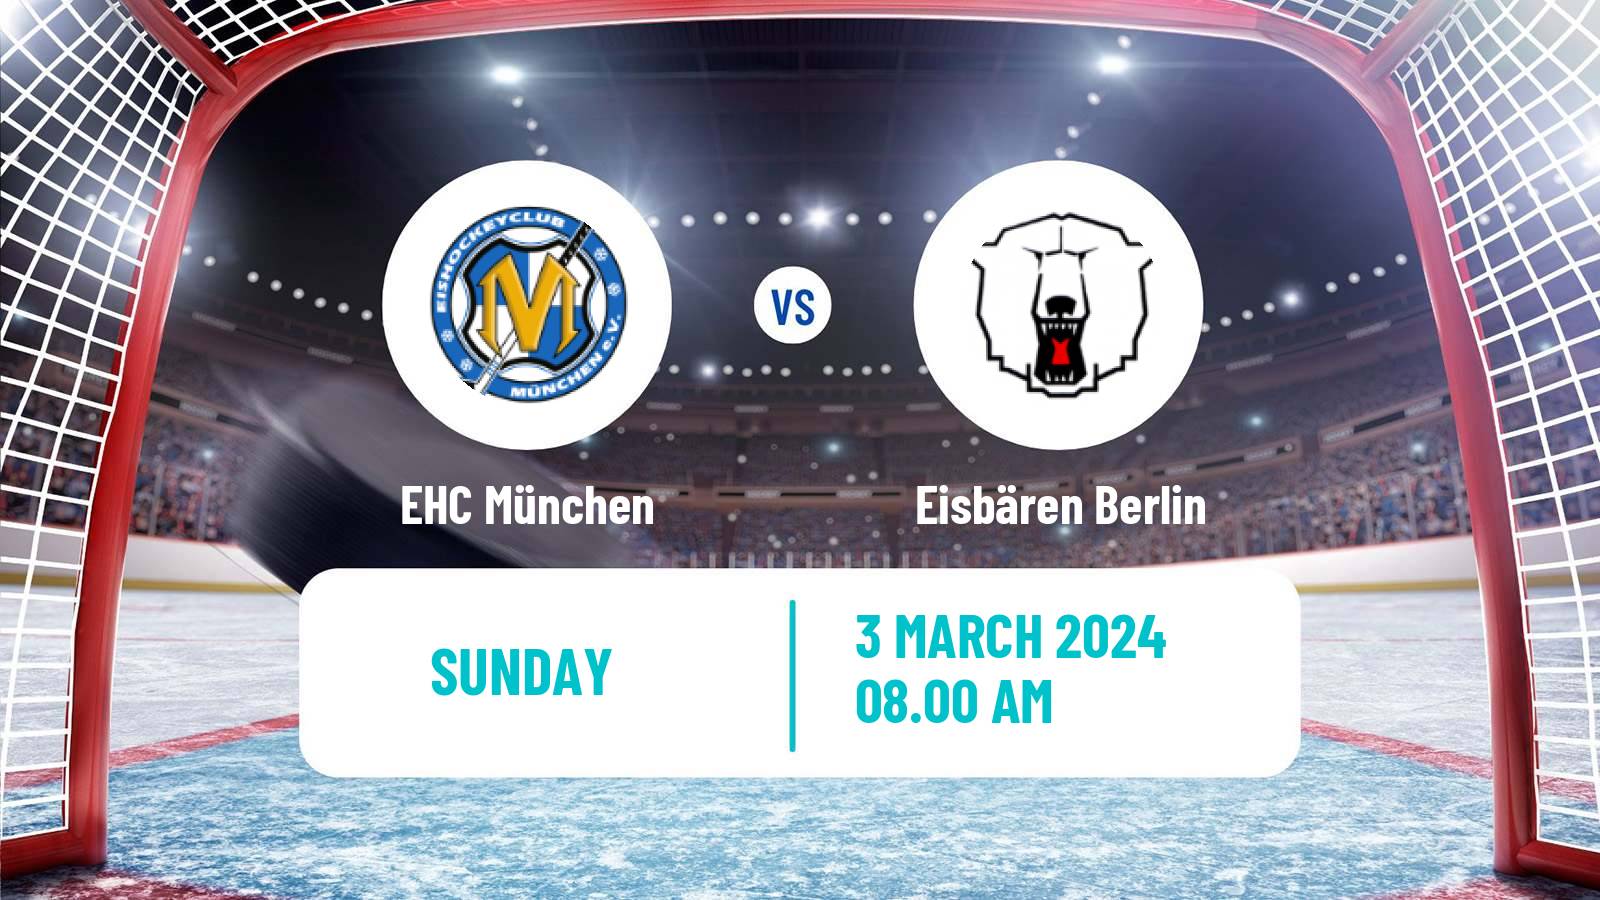 Hockey German Ice Hockey League EHC München - Eisbären Berlin